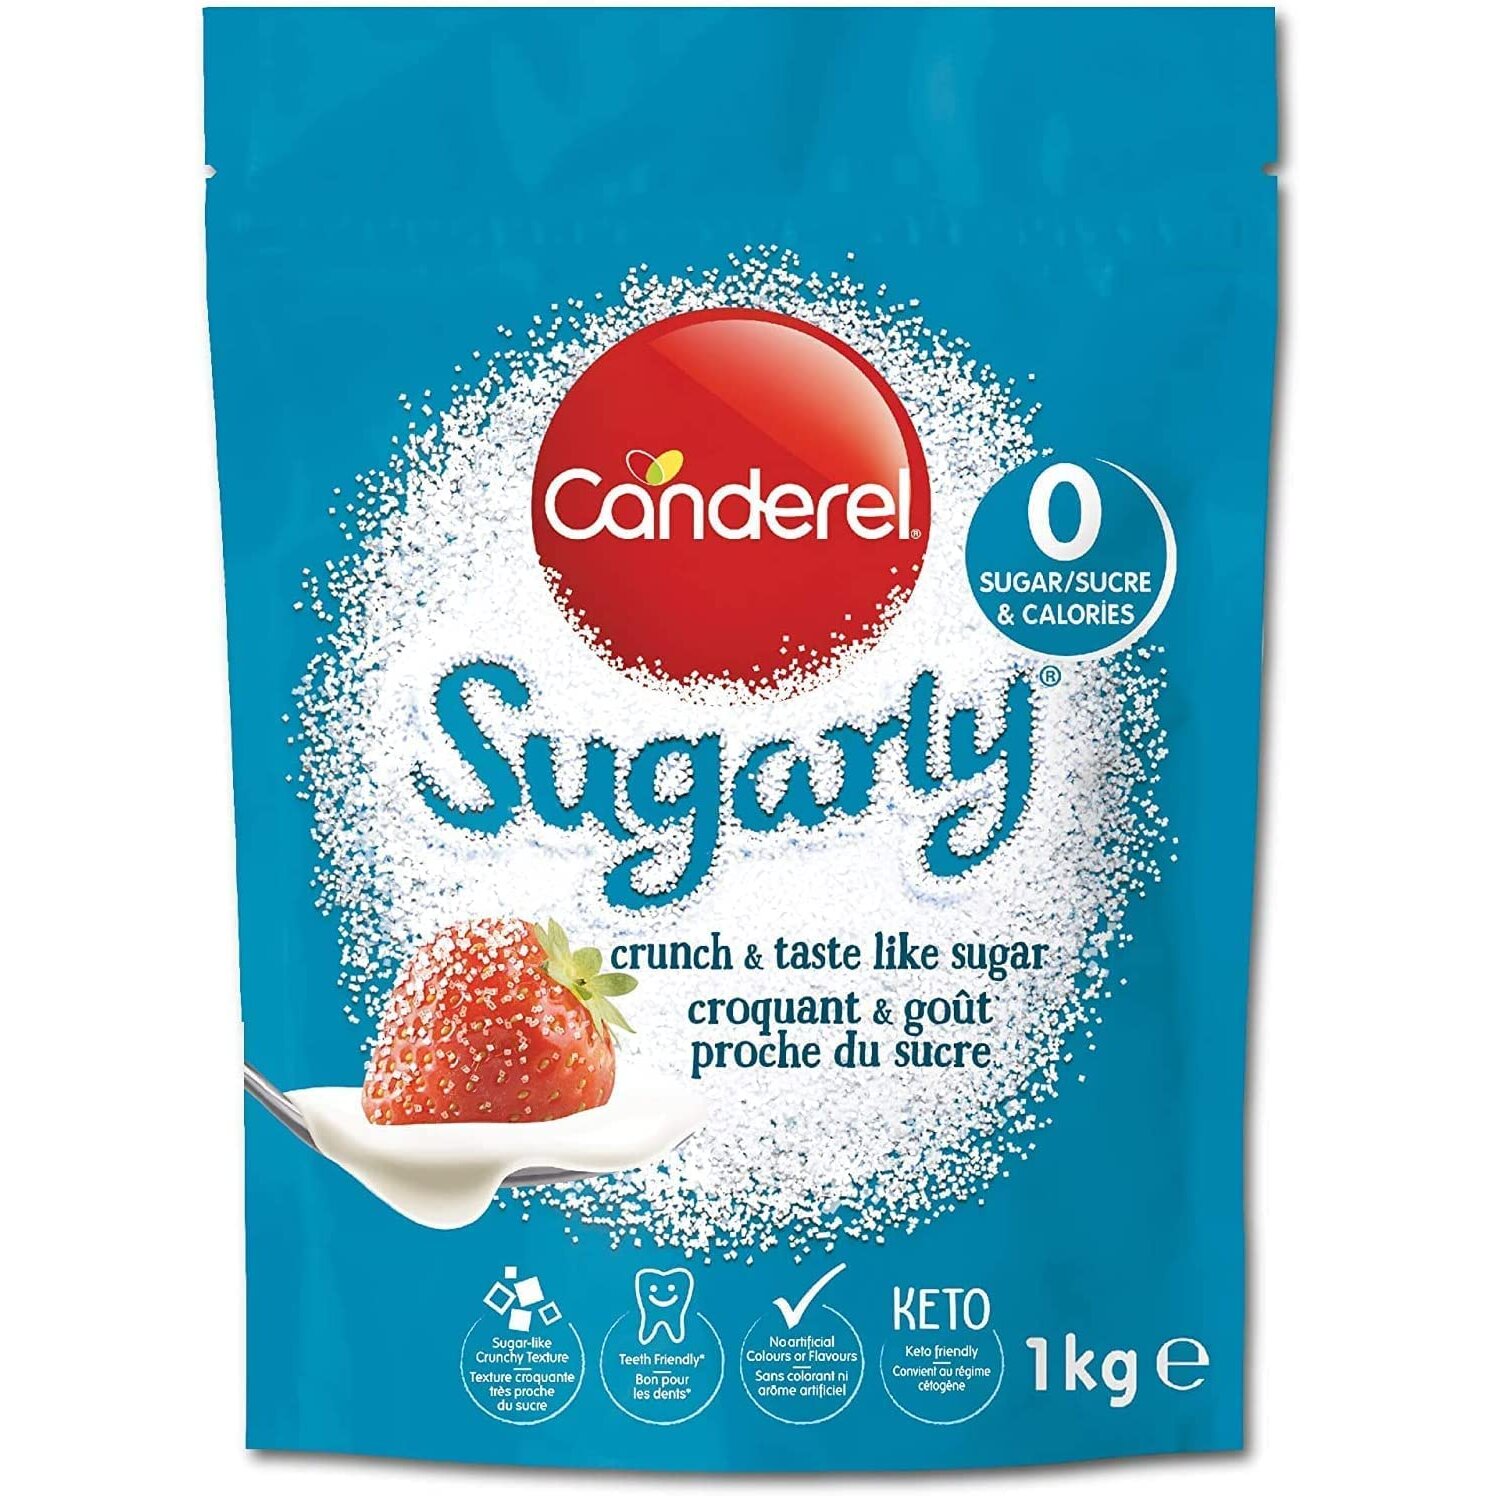 Canderel Sugarly Crunchy Sweetener 1kg VALUE PACK Equivalent to 2kg of Sugar